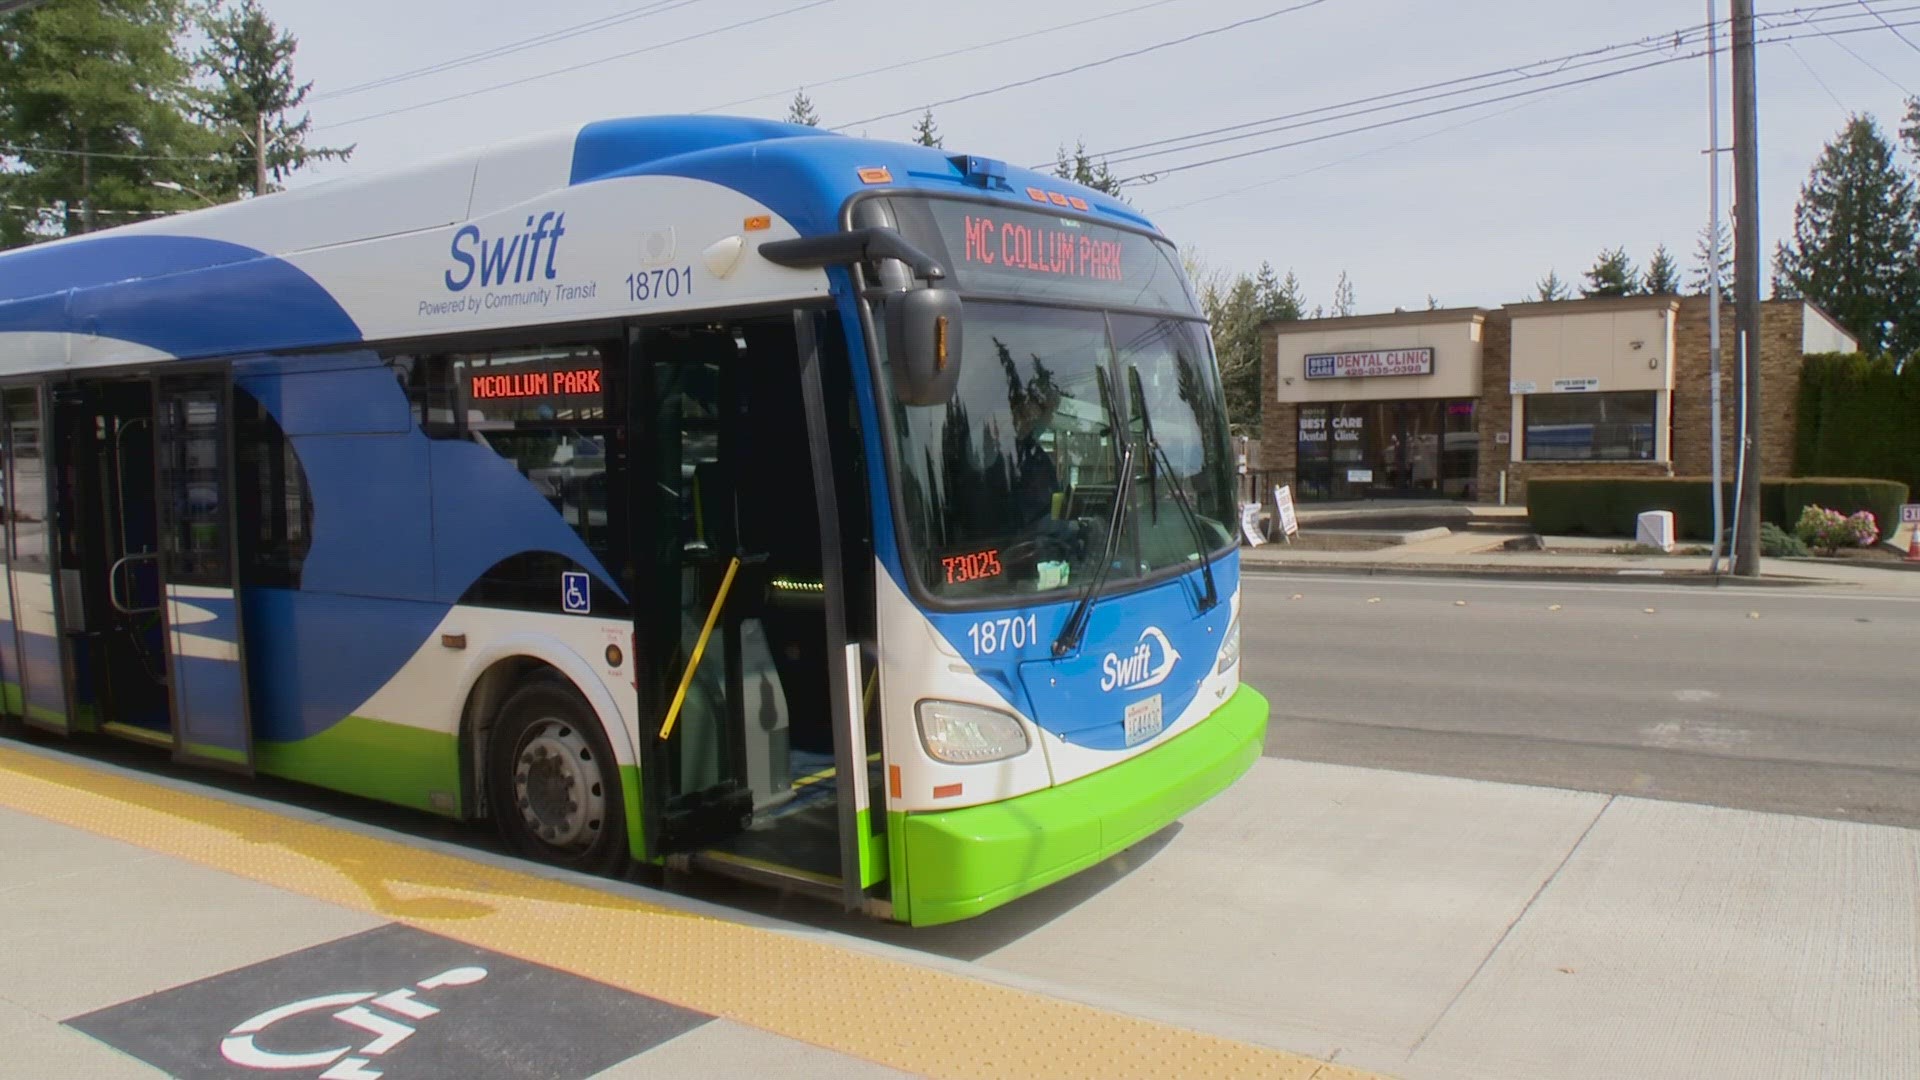 The 11-mile route links Edmonds to Everett via bus.